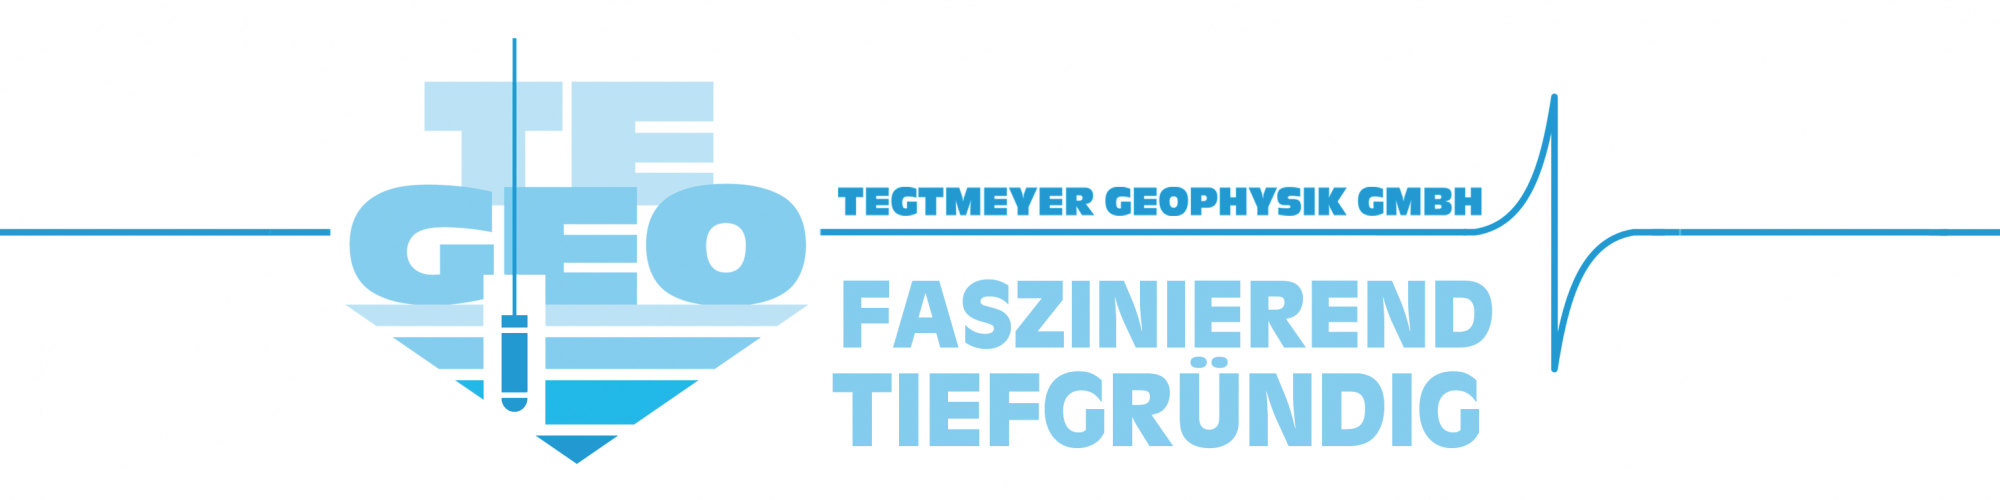 tegeo, Tegtmeyer Geophysik GmbH